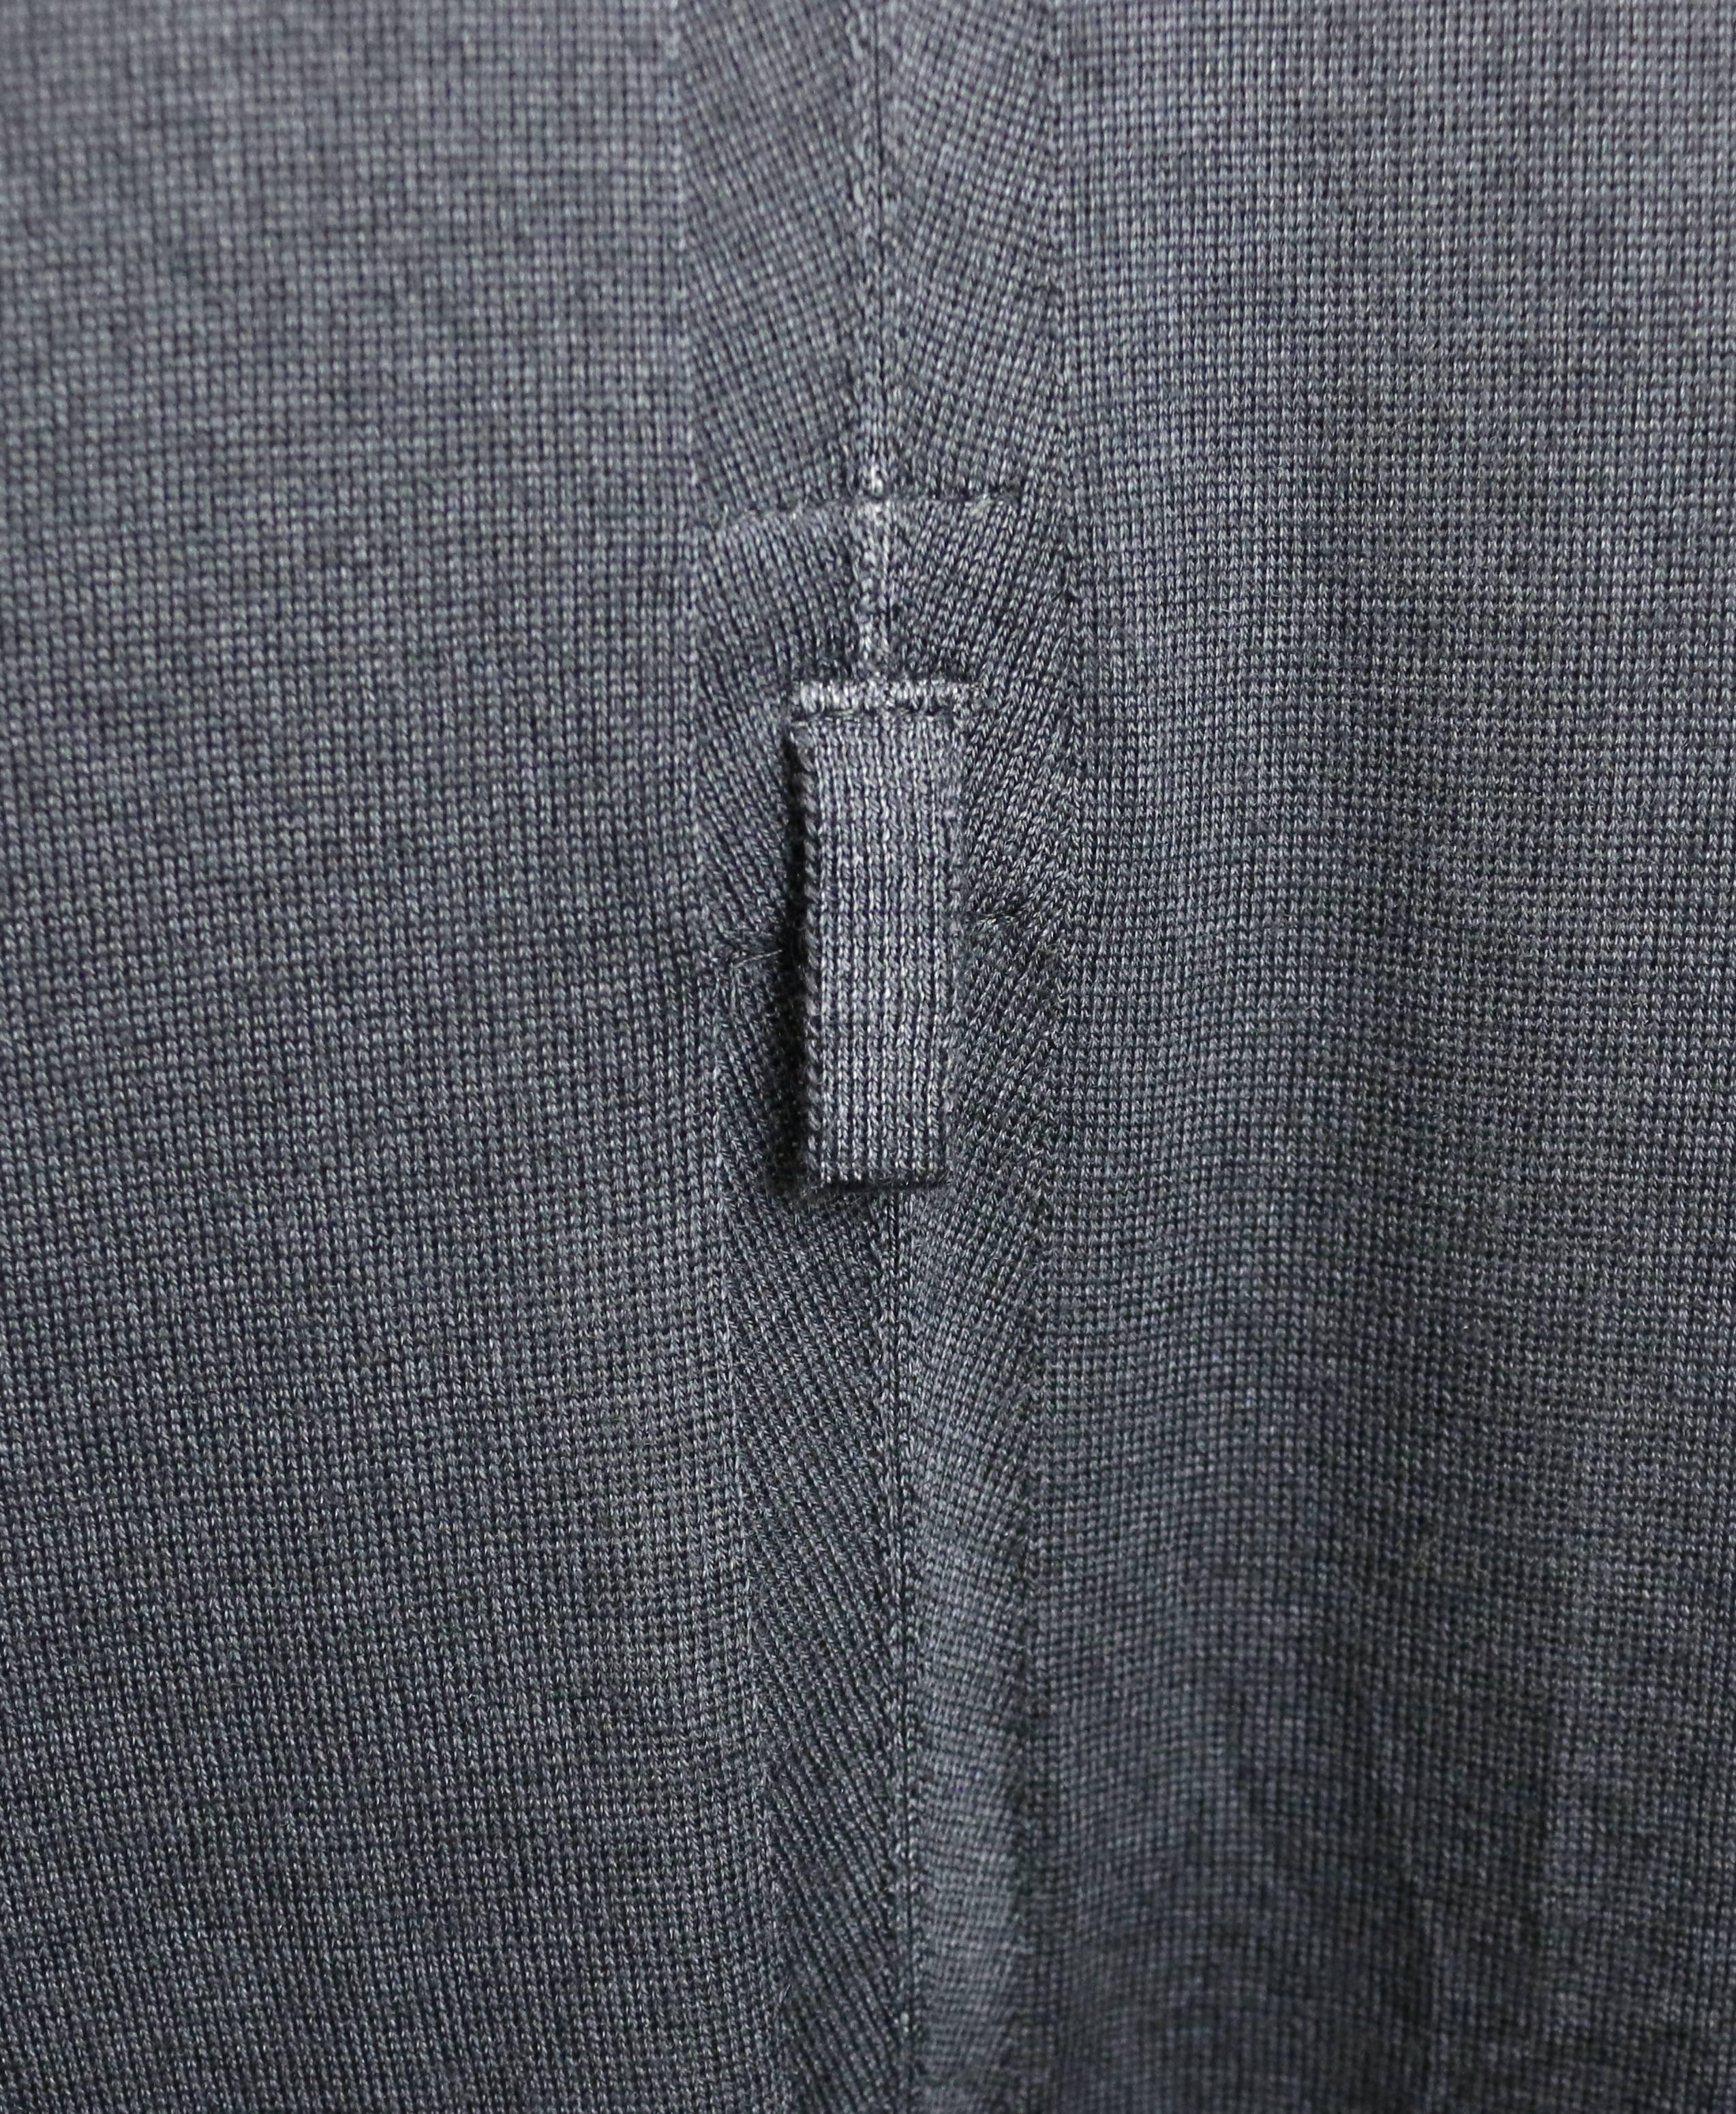 Yves Saint Laurent by Stefano Pilati Grey Wool Long Maxi Dress For Sale ...